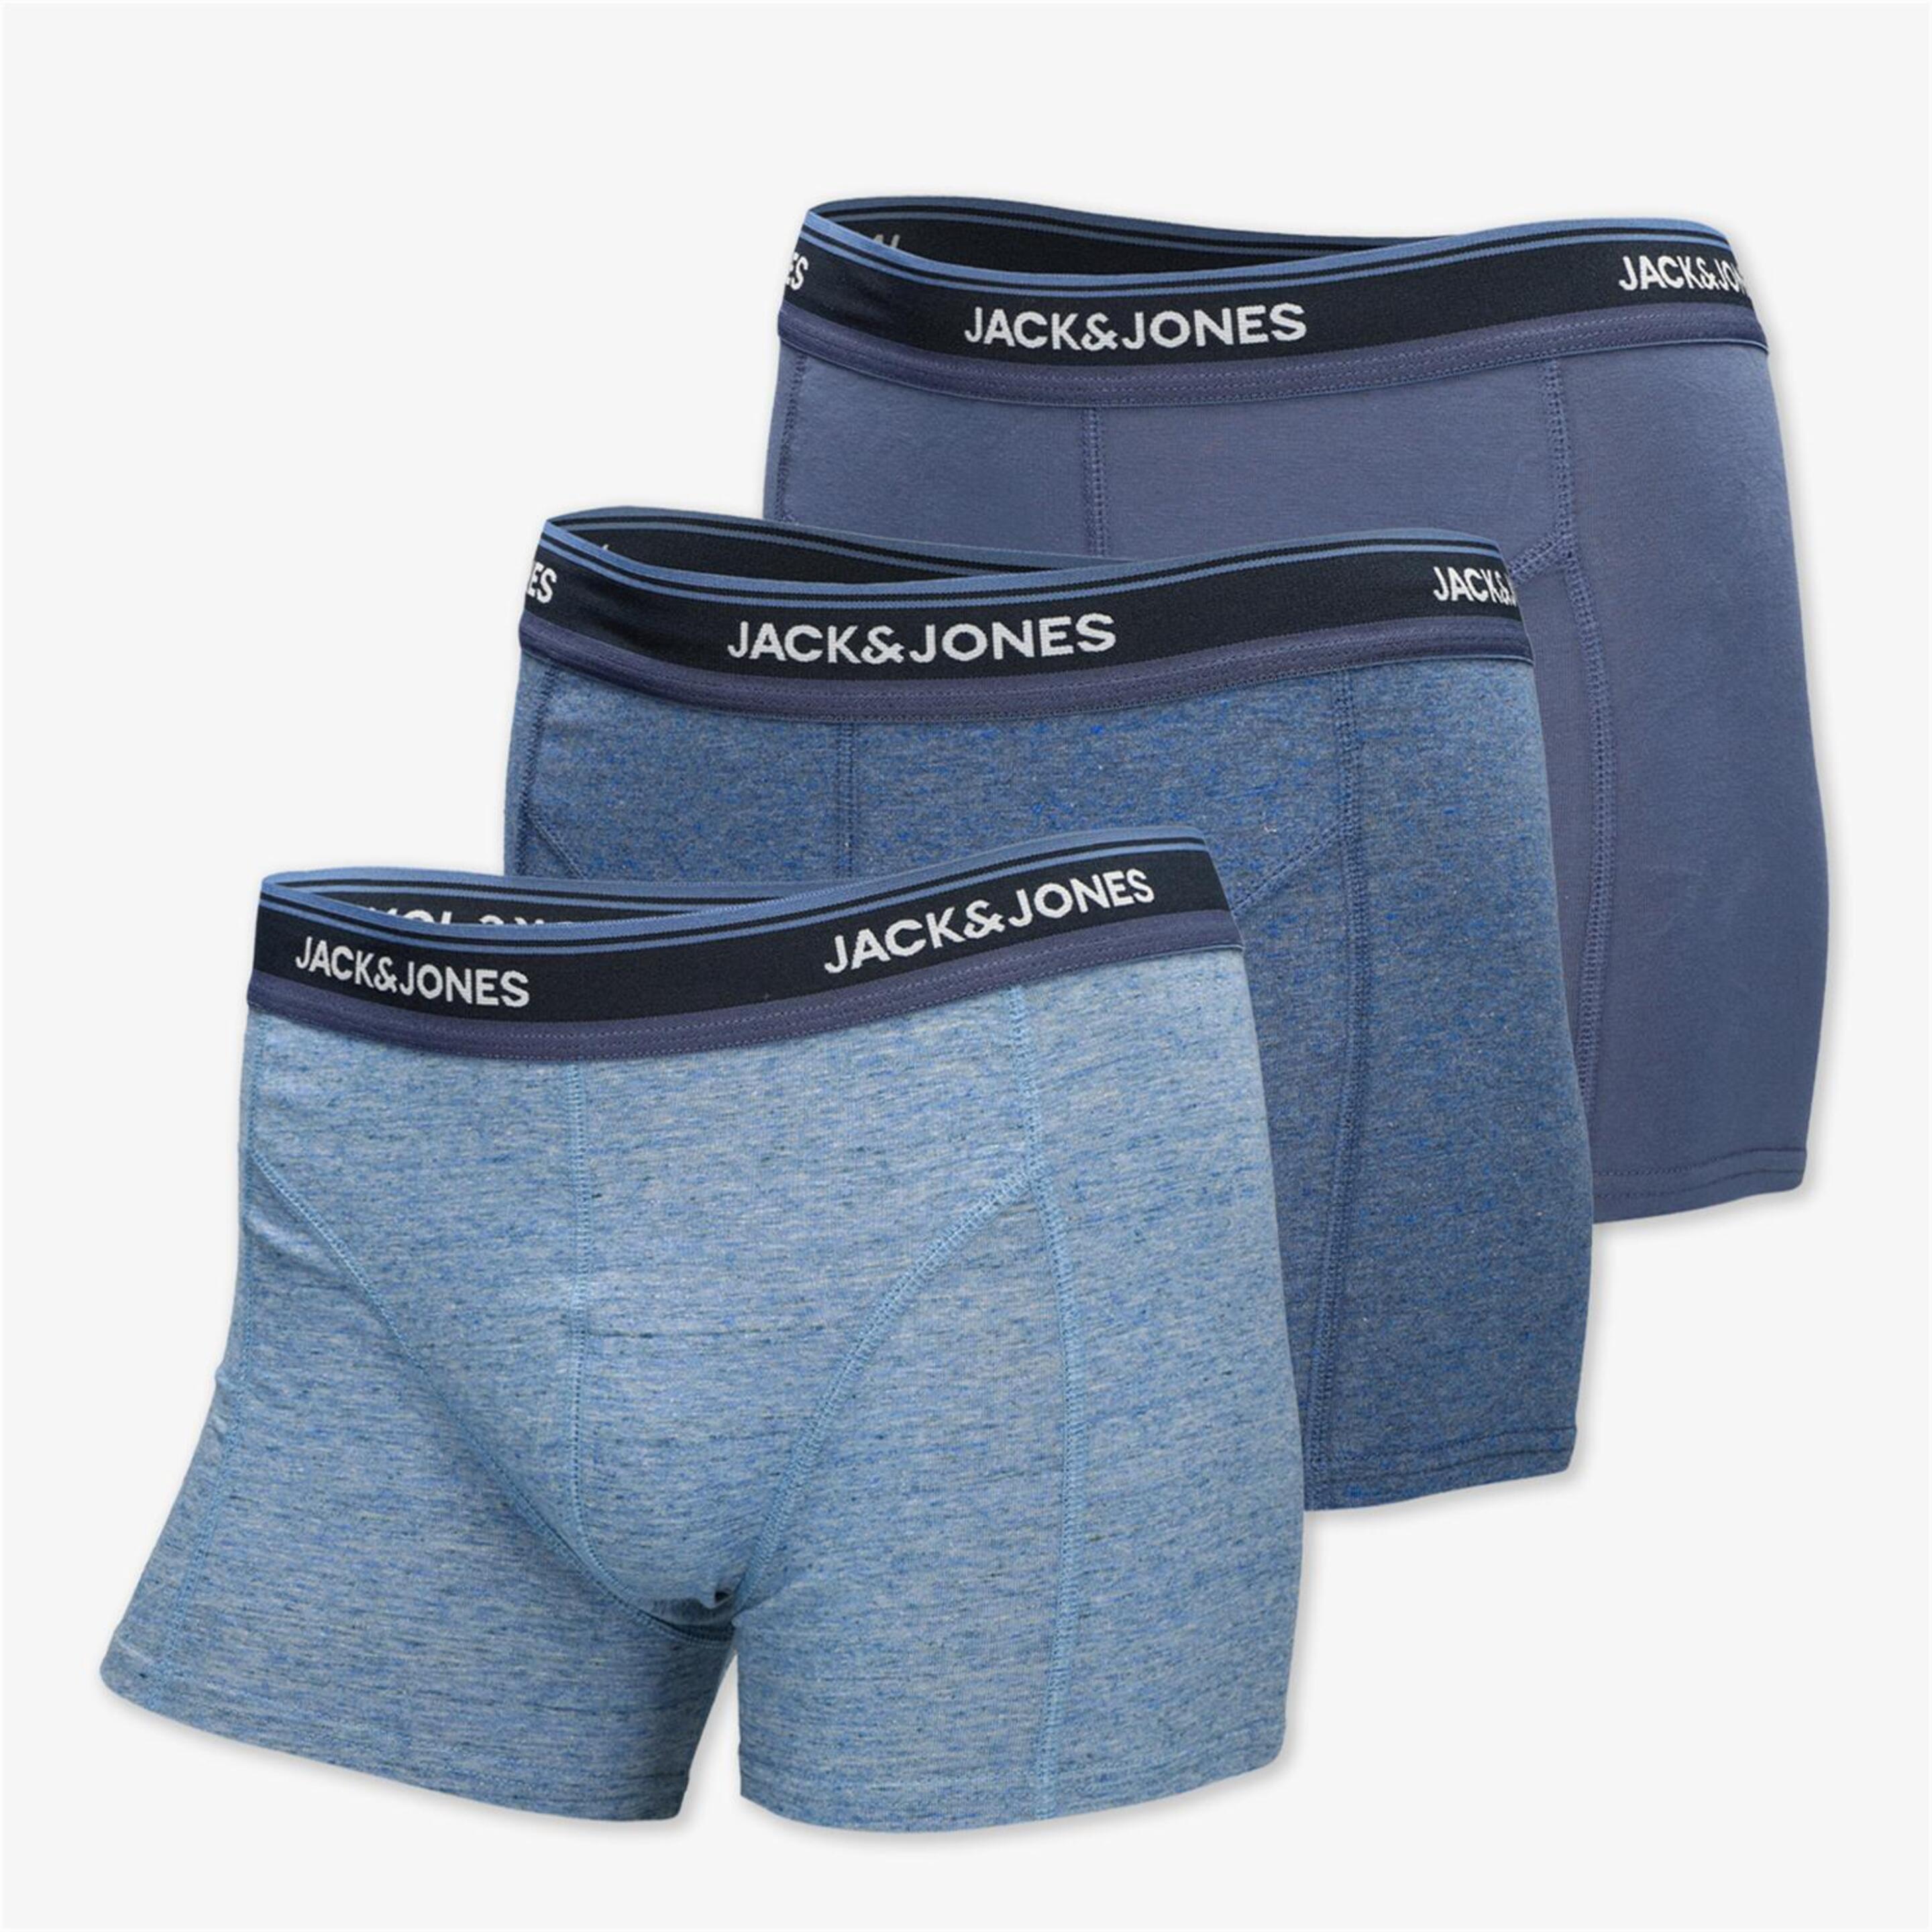 Jack & Jones Jacwells - azul - Calzoncillos Bóxer